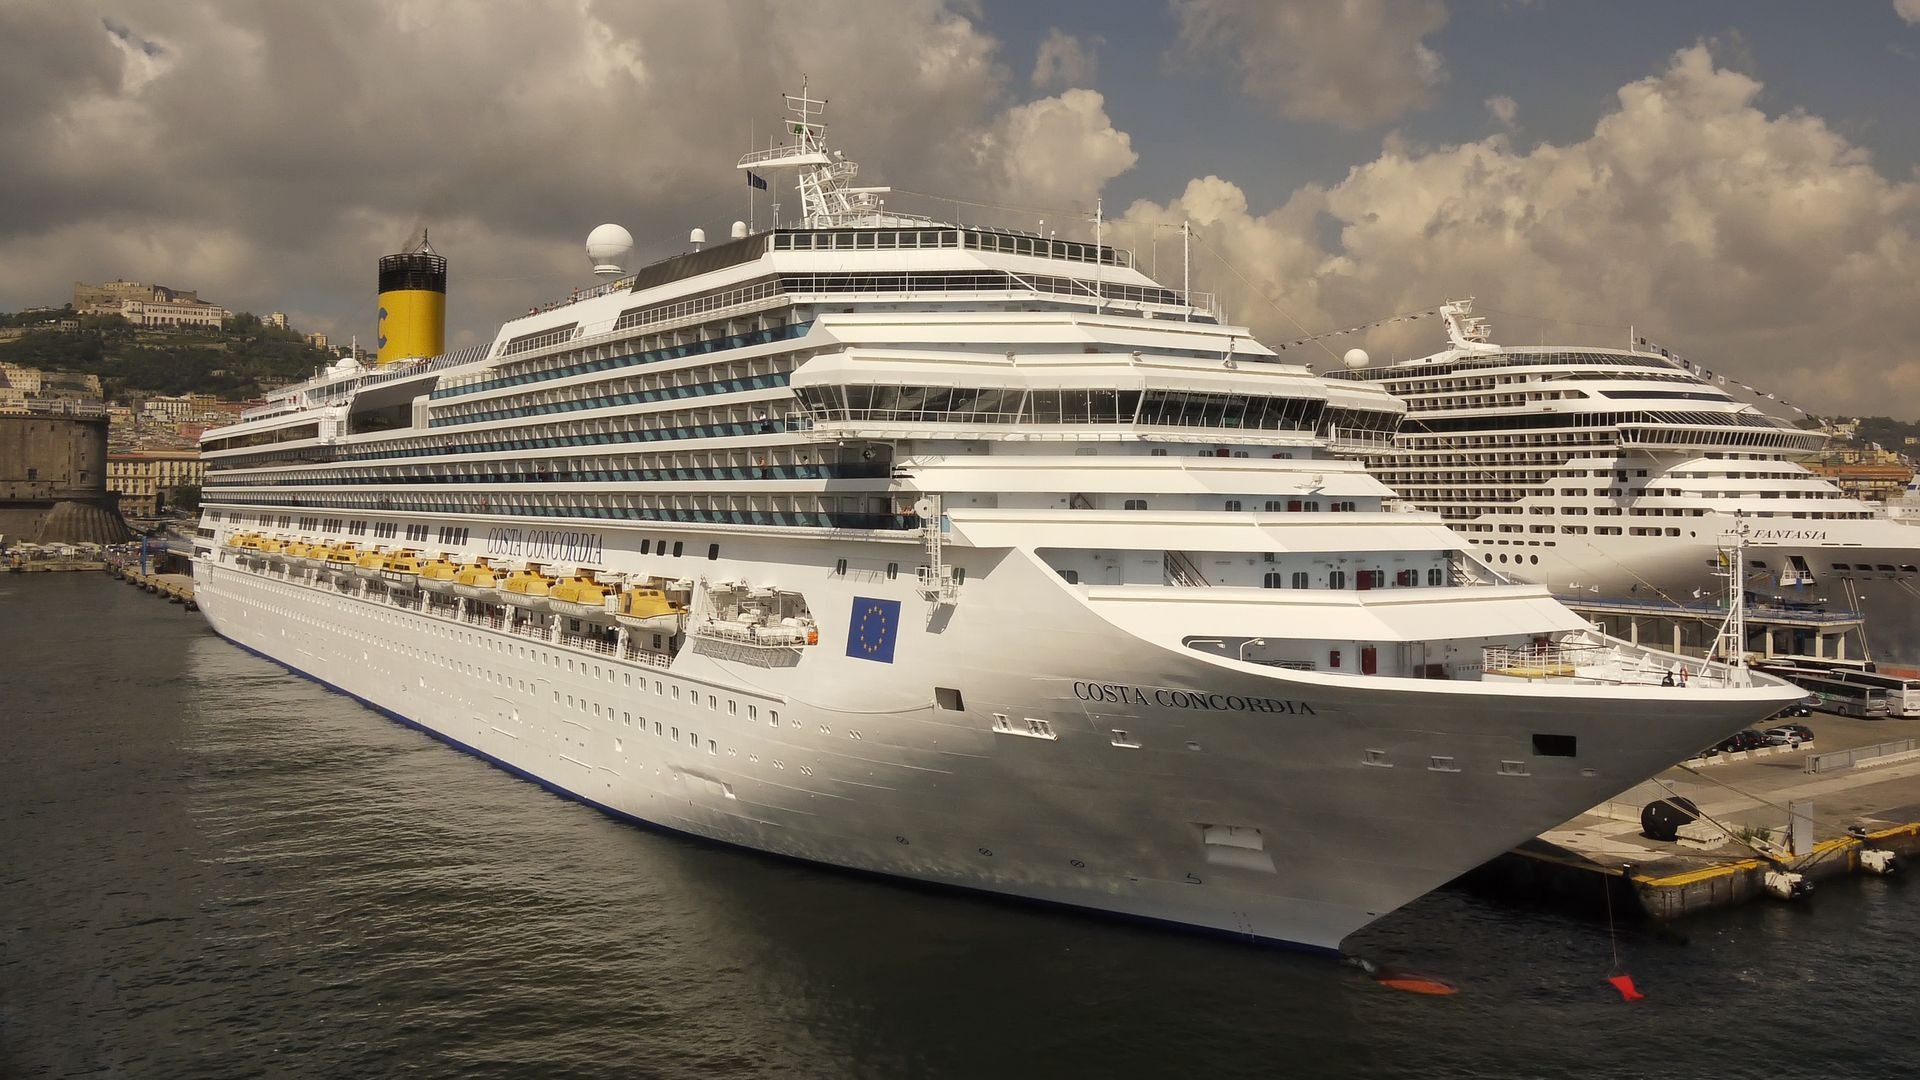 cruise ship wallpaper,cruise ship,vehicle,passenger ship,water transportation,ship